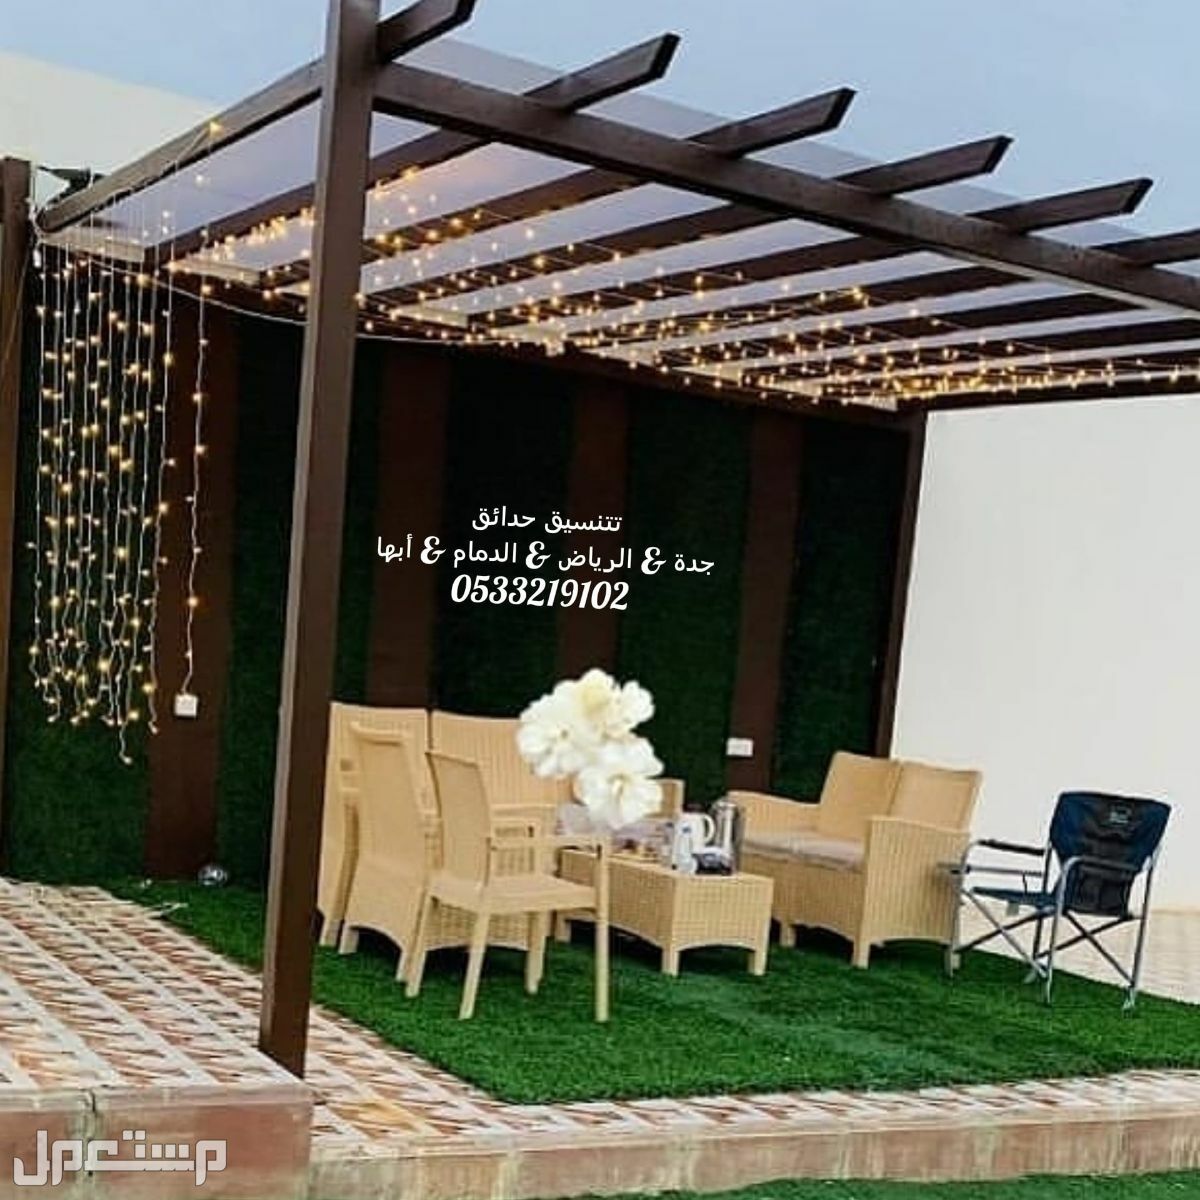 سواتر مظلات شلالات نوافير خشب باركية حدائق داخليه جدة مكة تنسيق حدائق عشب